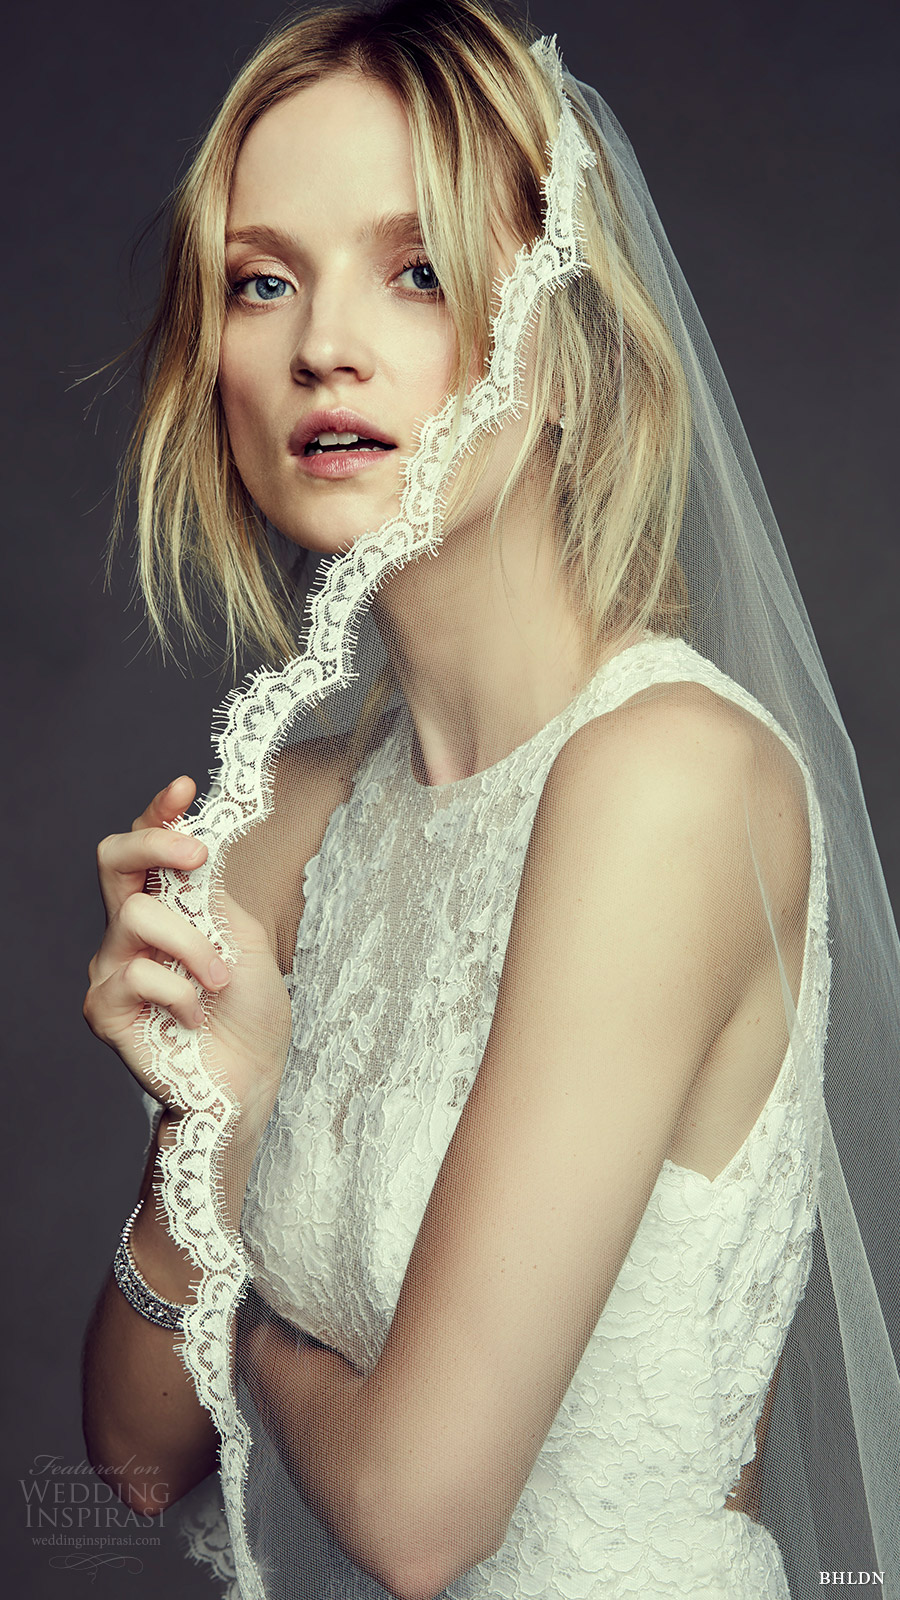 bhldn bridal may 2016 adeline lace veil